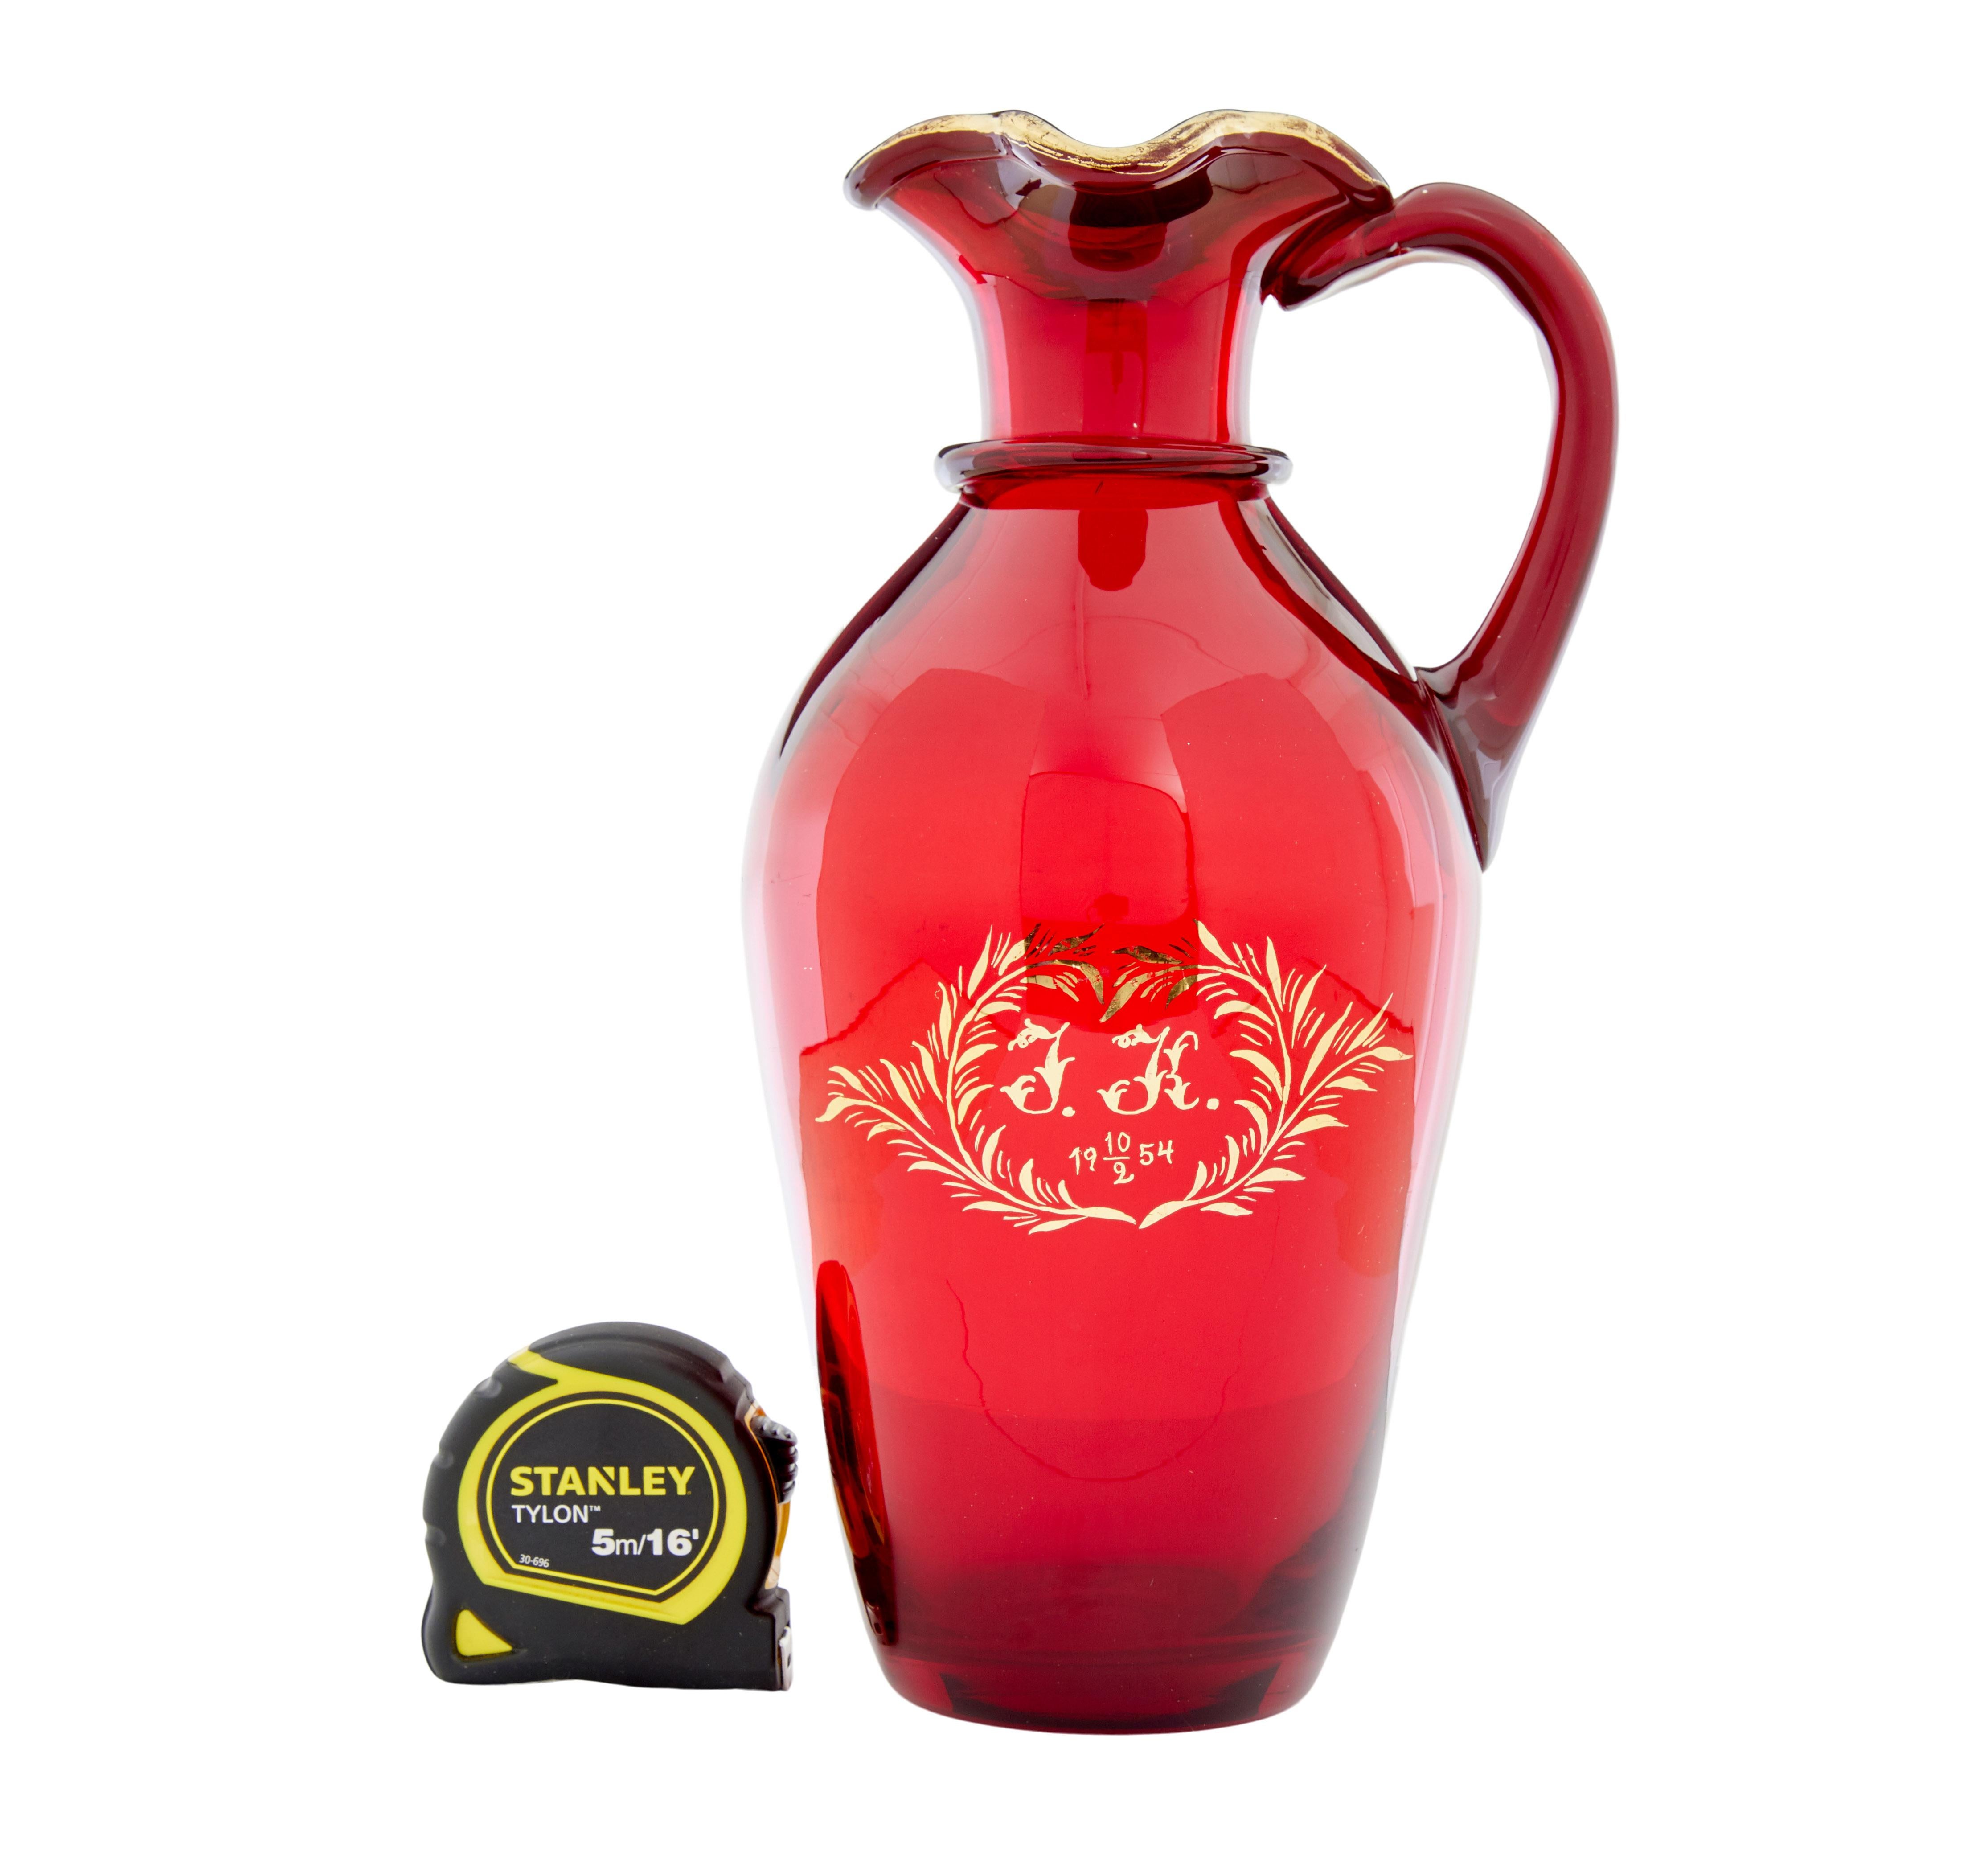 Gilt Mid 20th century 1950’s gilt art glass jug by Monica Bratt For Sale